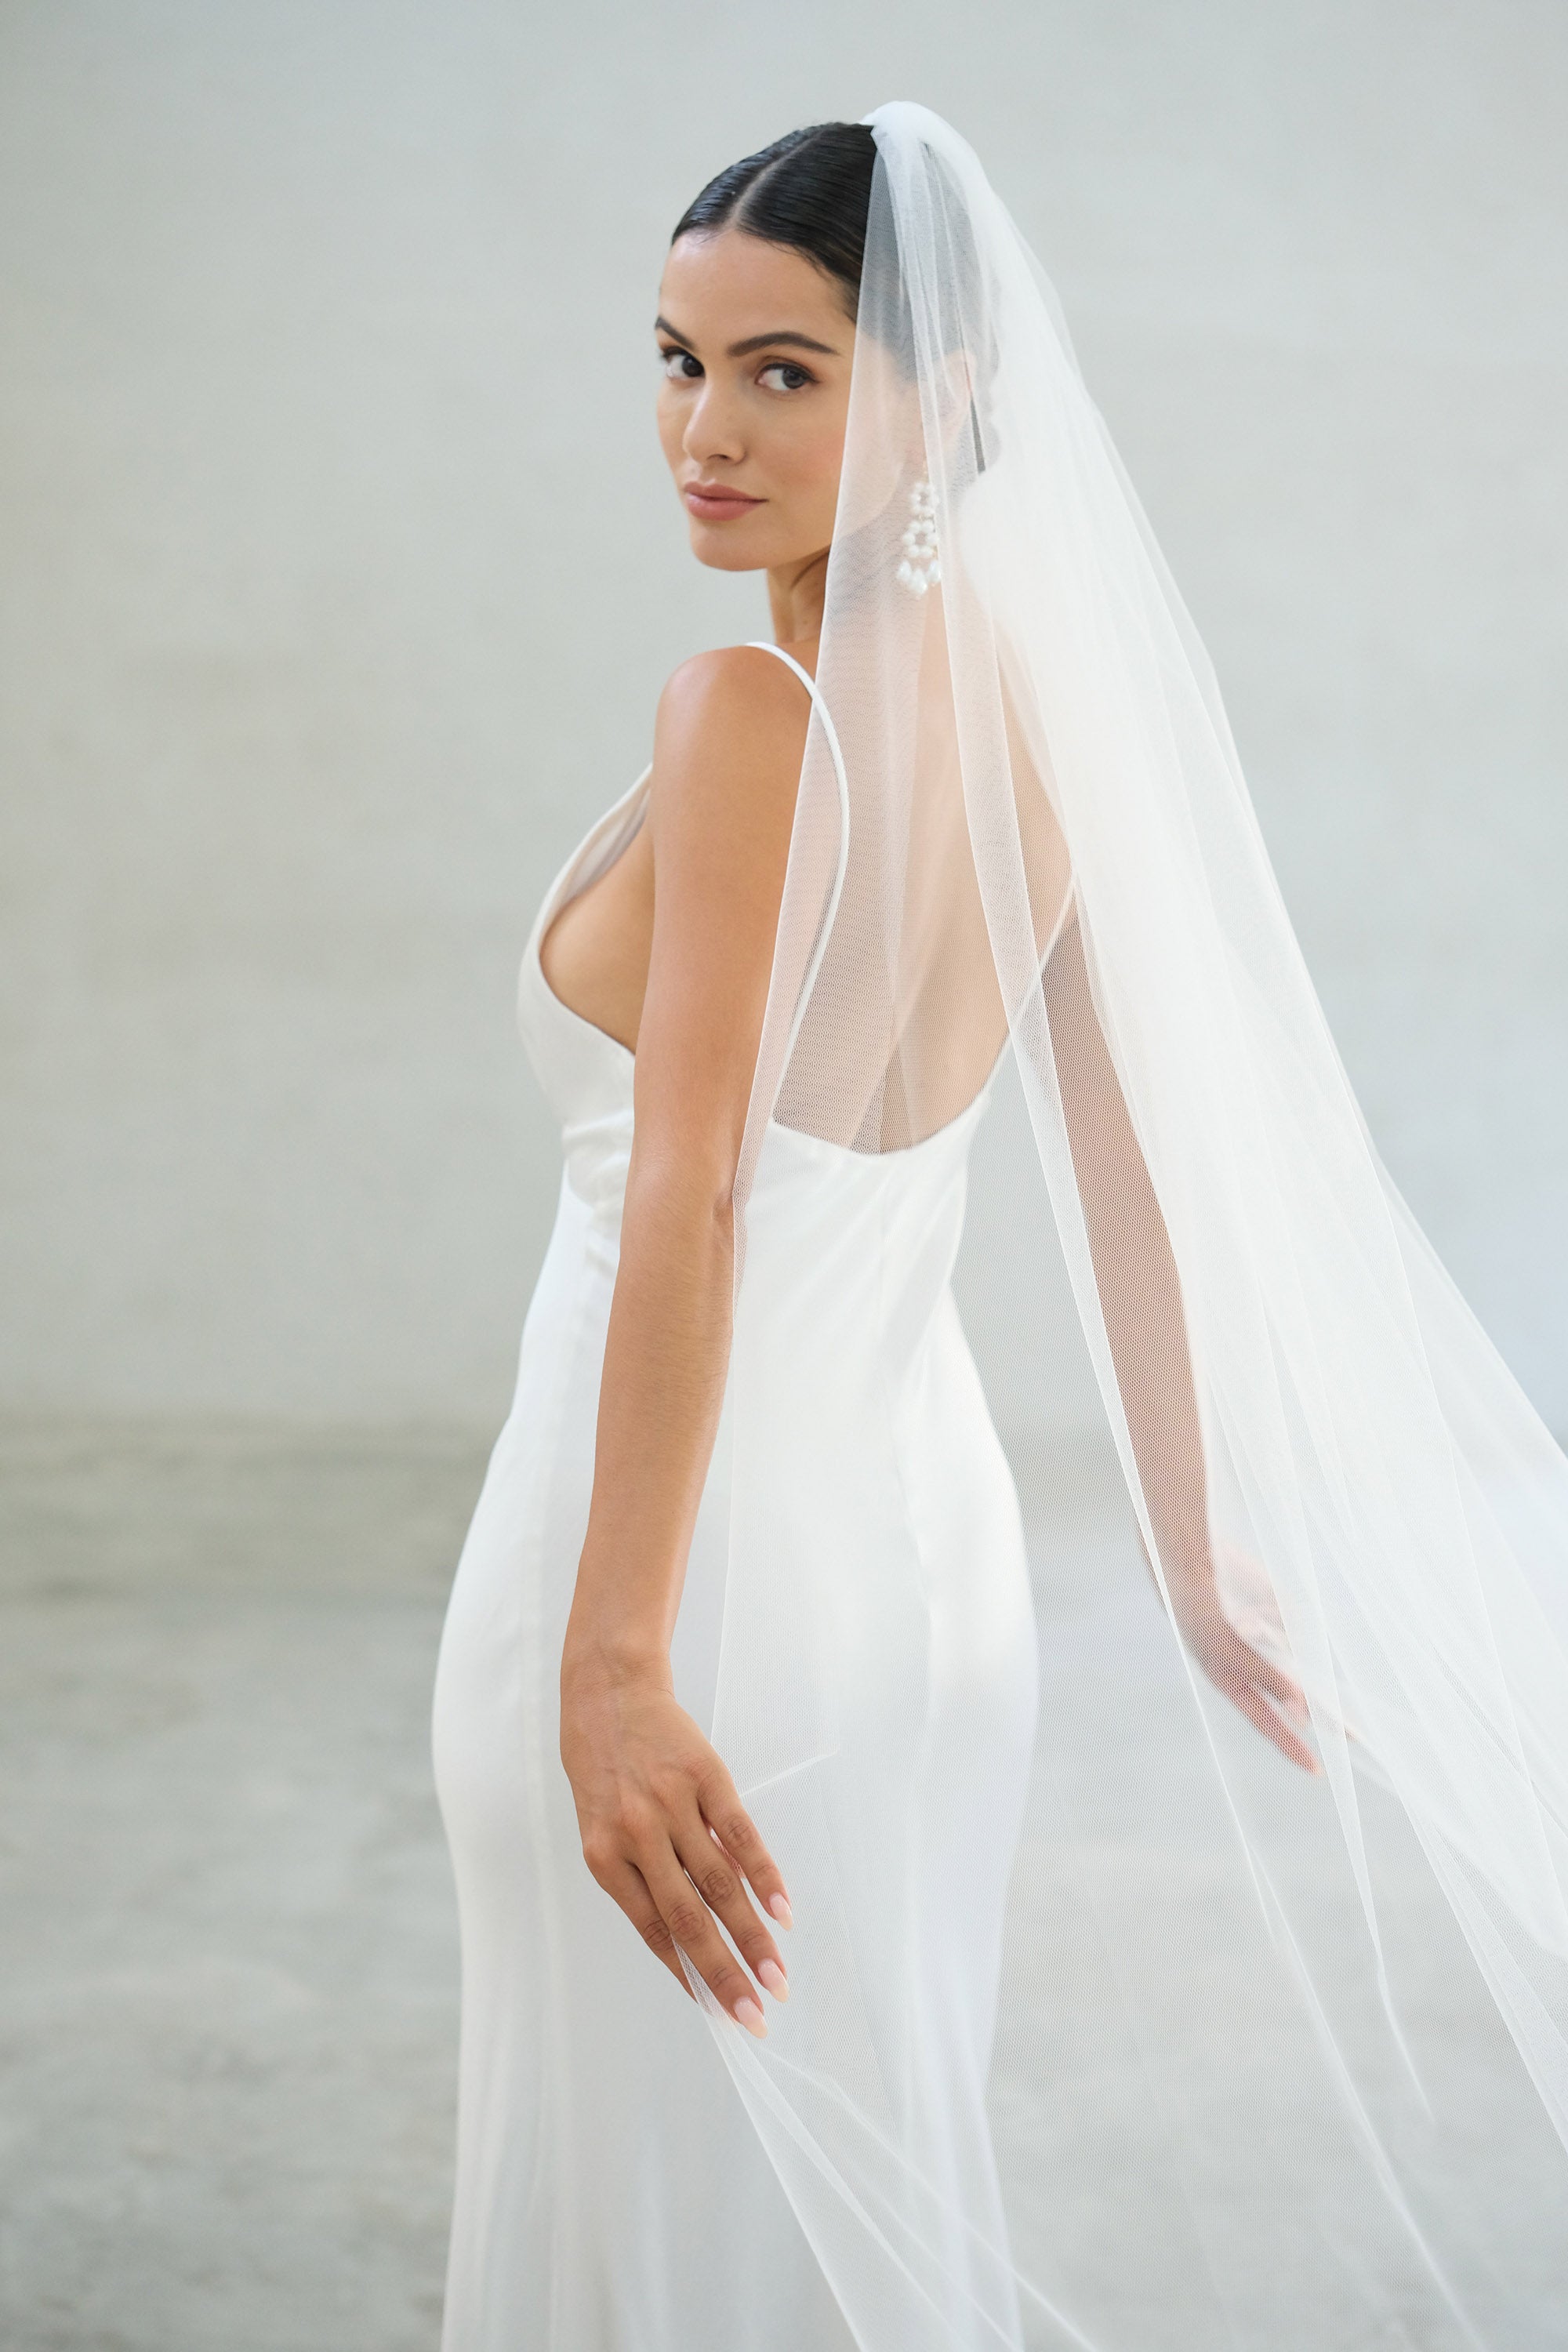 LAYLA Veil, Two Tier Veil, Veil, Fingertip Veil, Sheer Veil, Wedding Veil,  Bridal Veil, Made in Australia. 